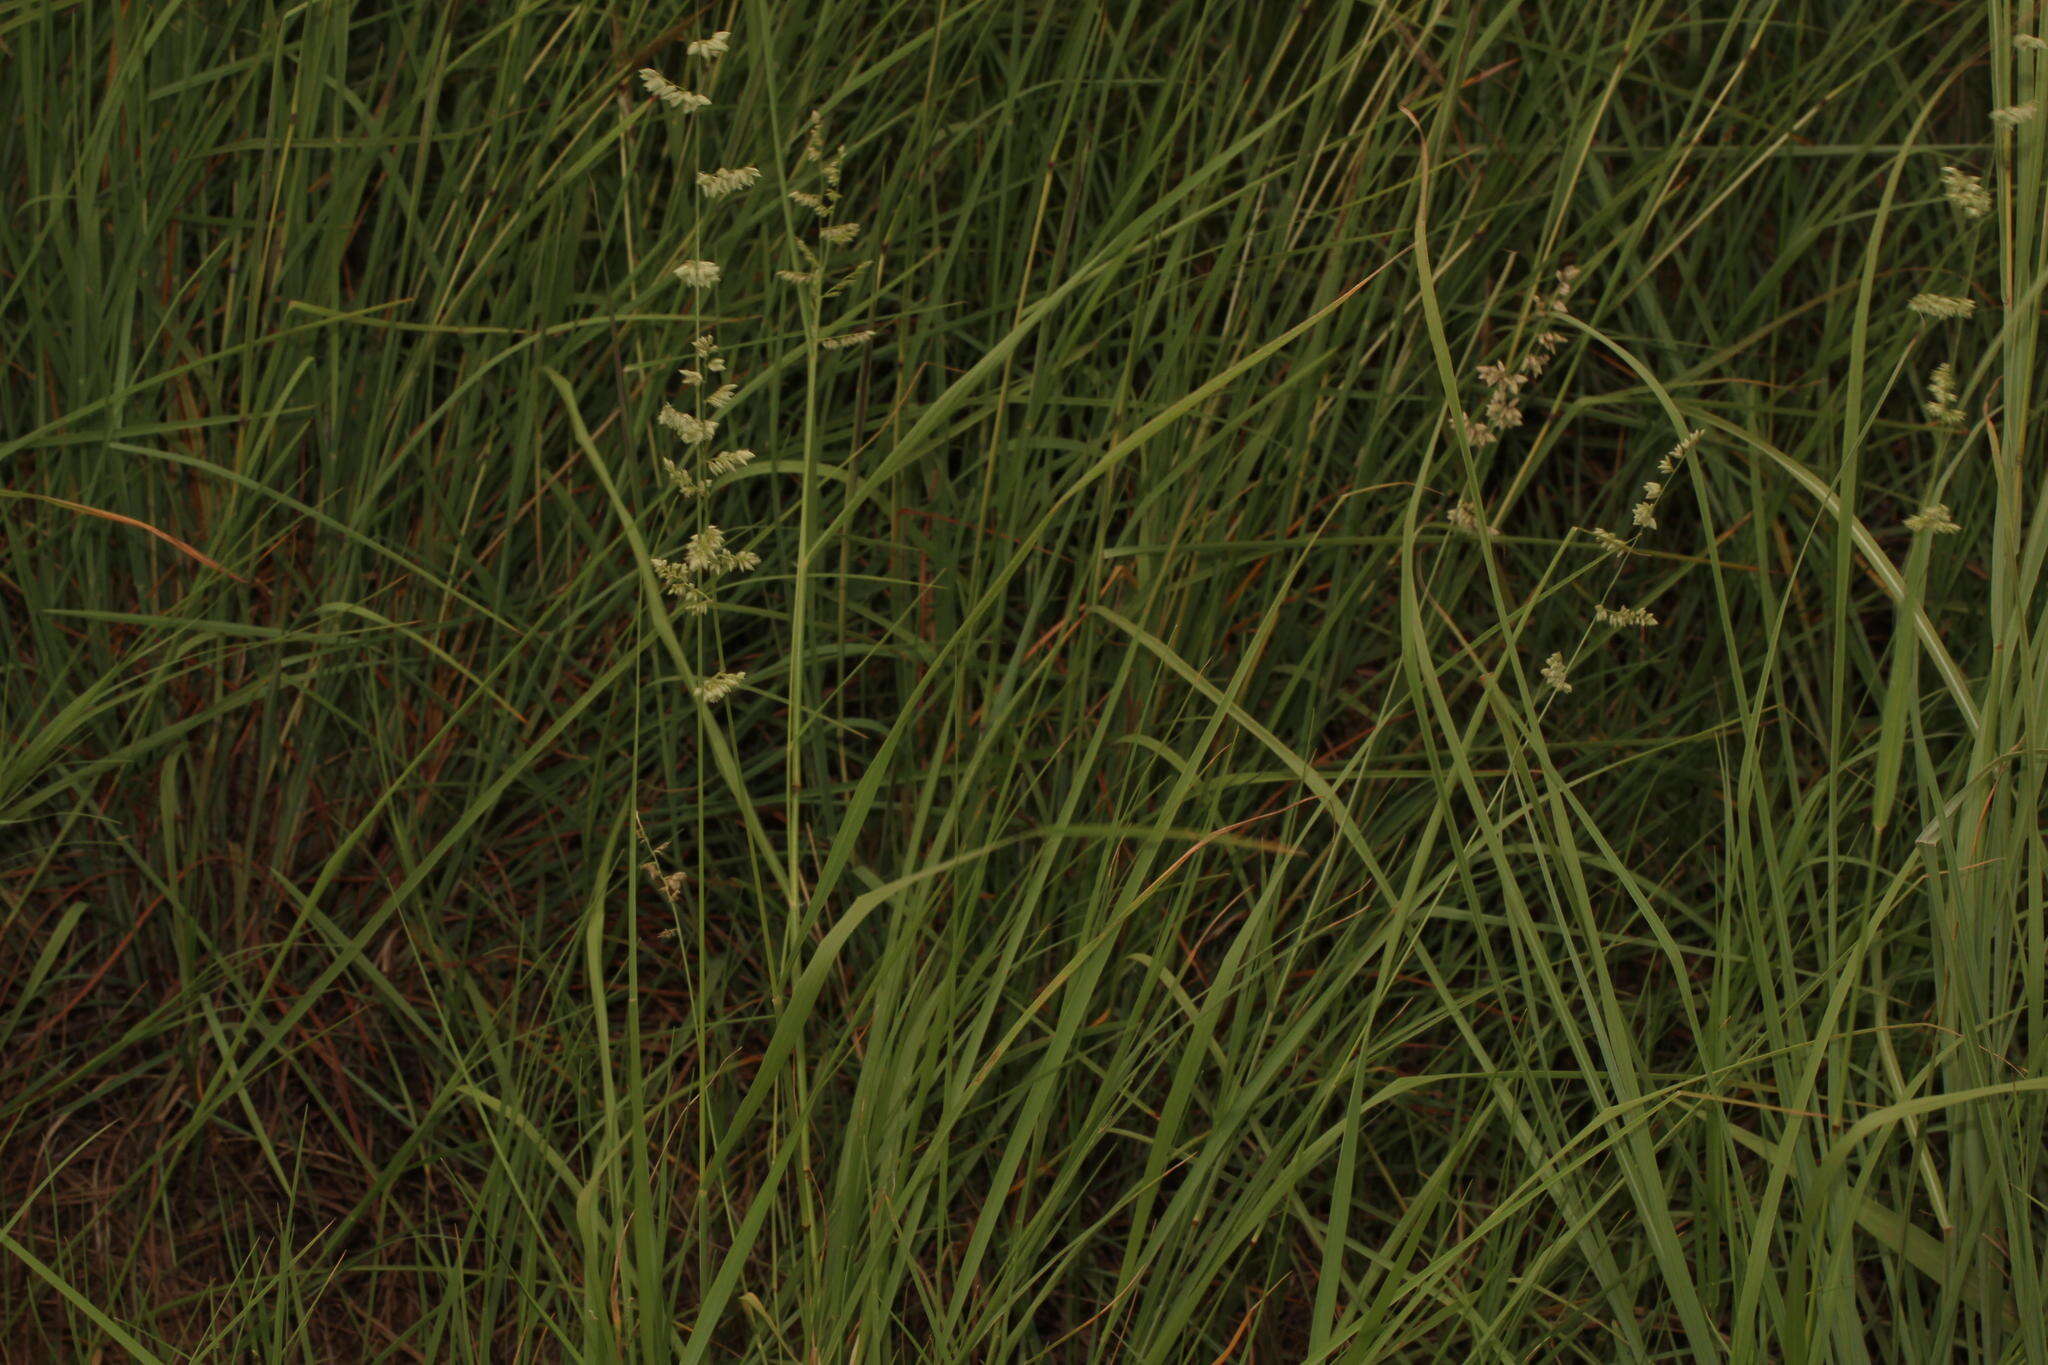 Image of African lovegrass